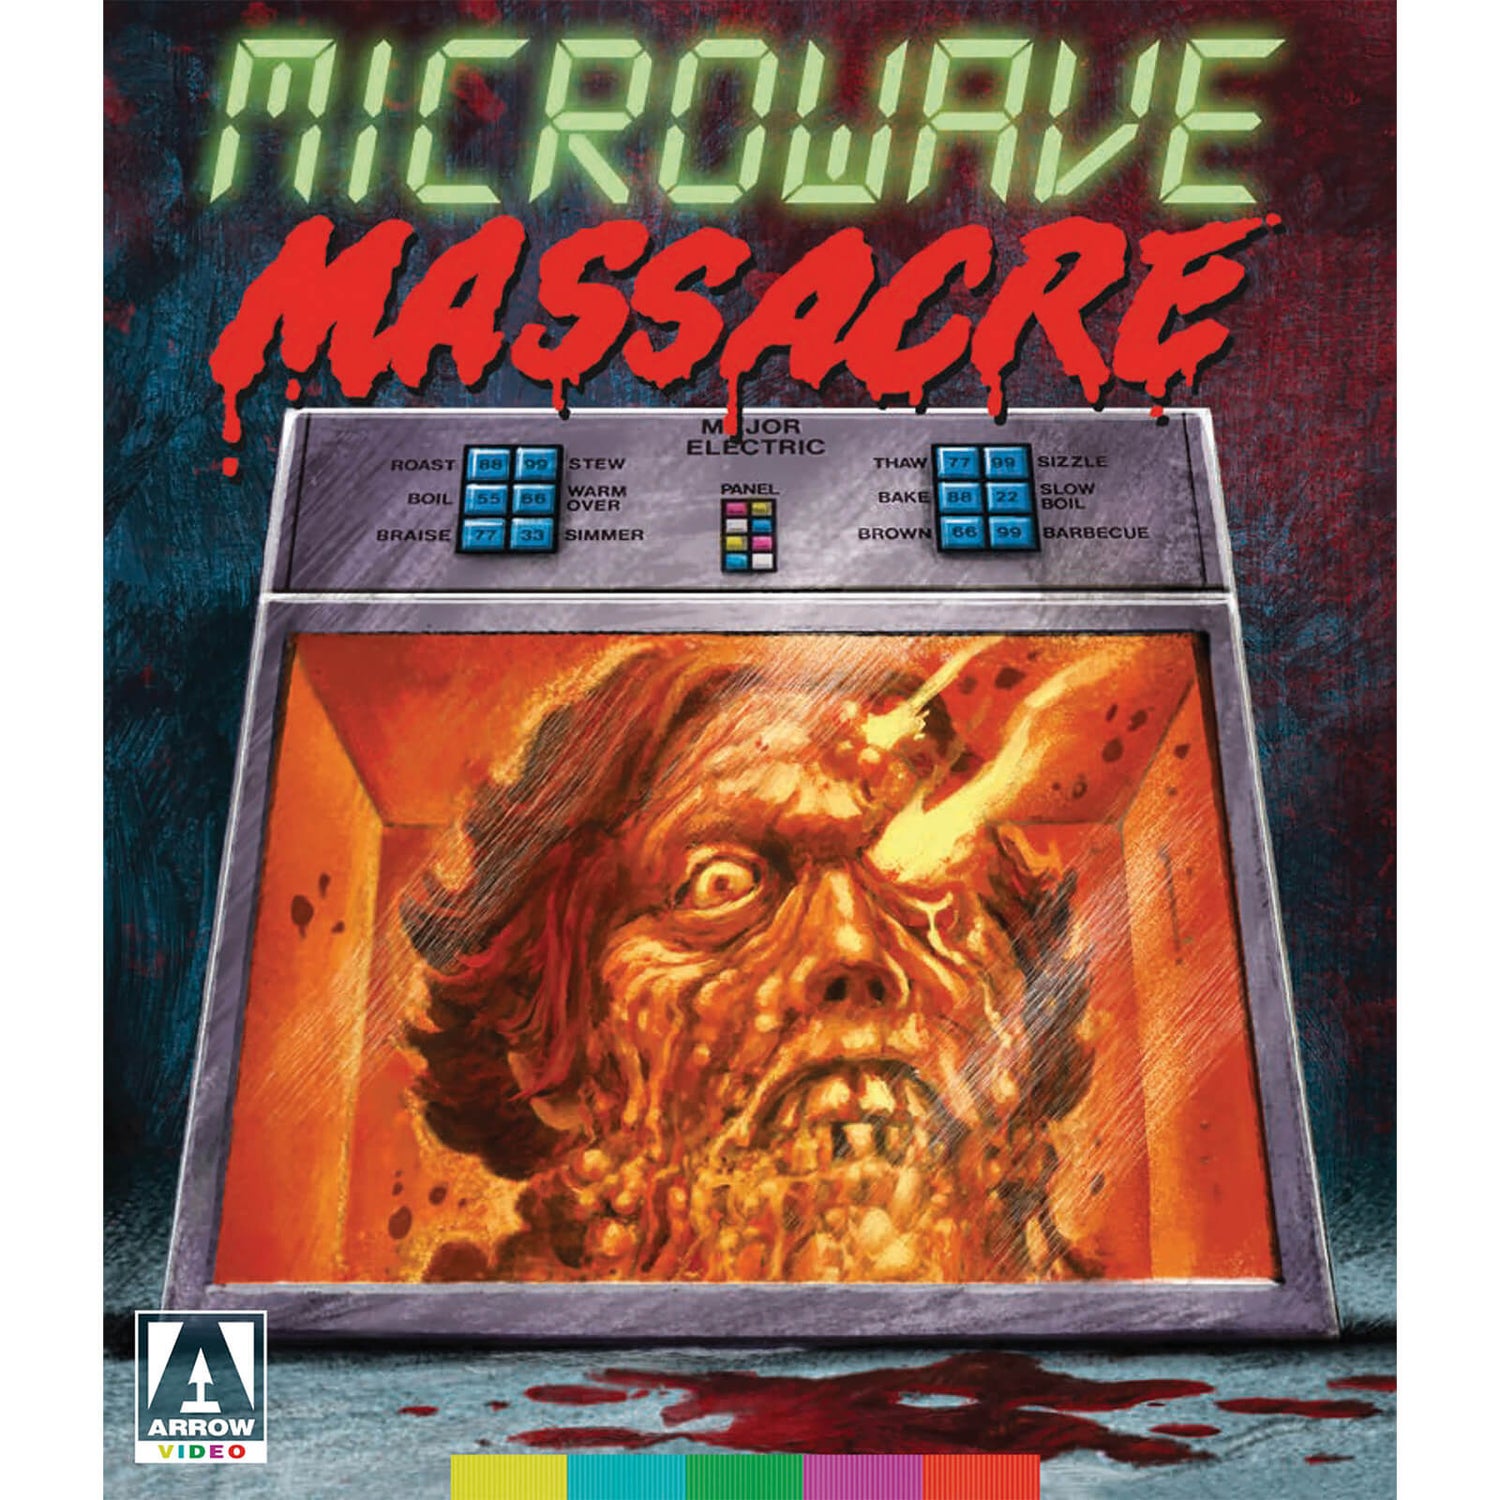 Microwave Massacre Blu-ray+DVD